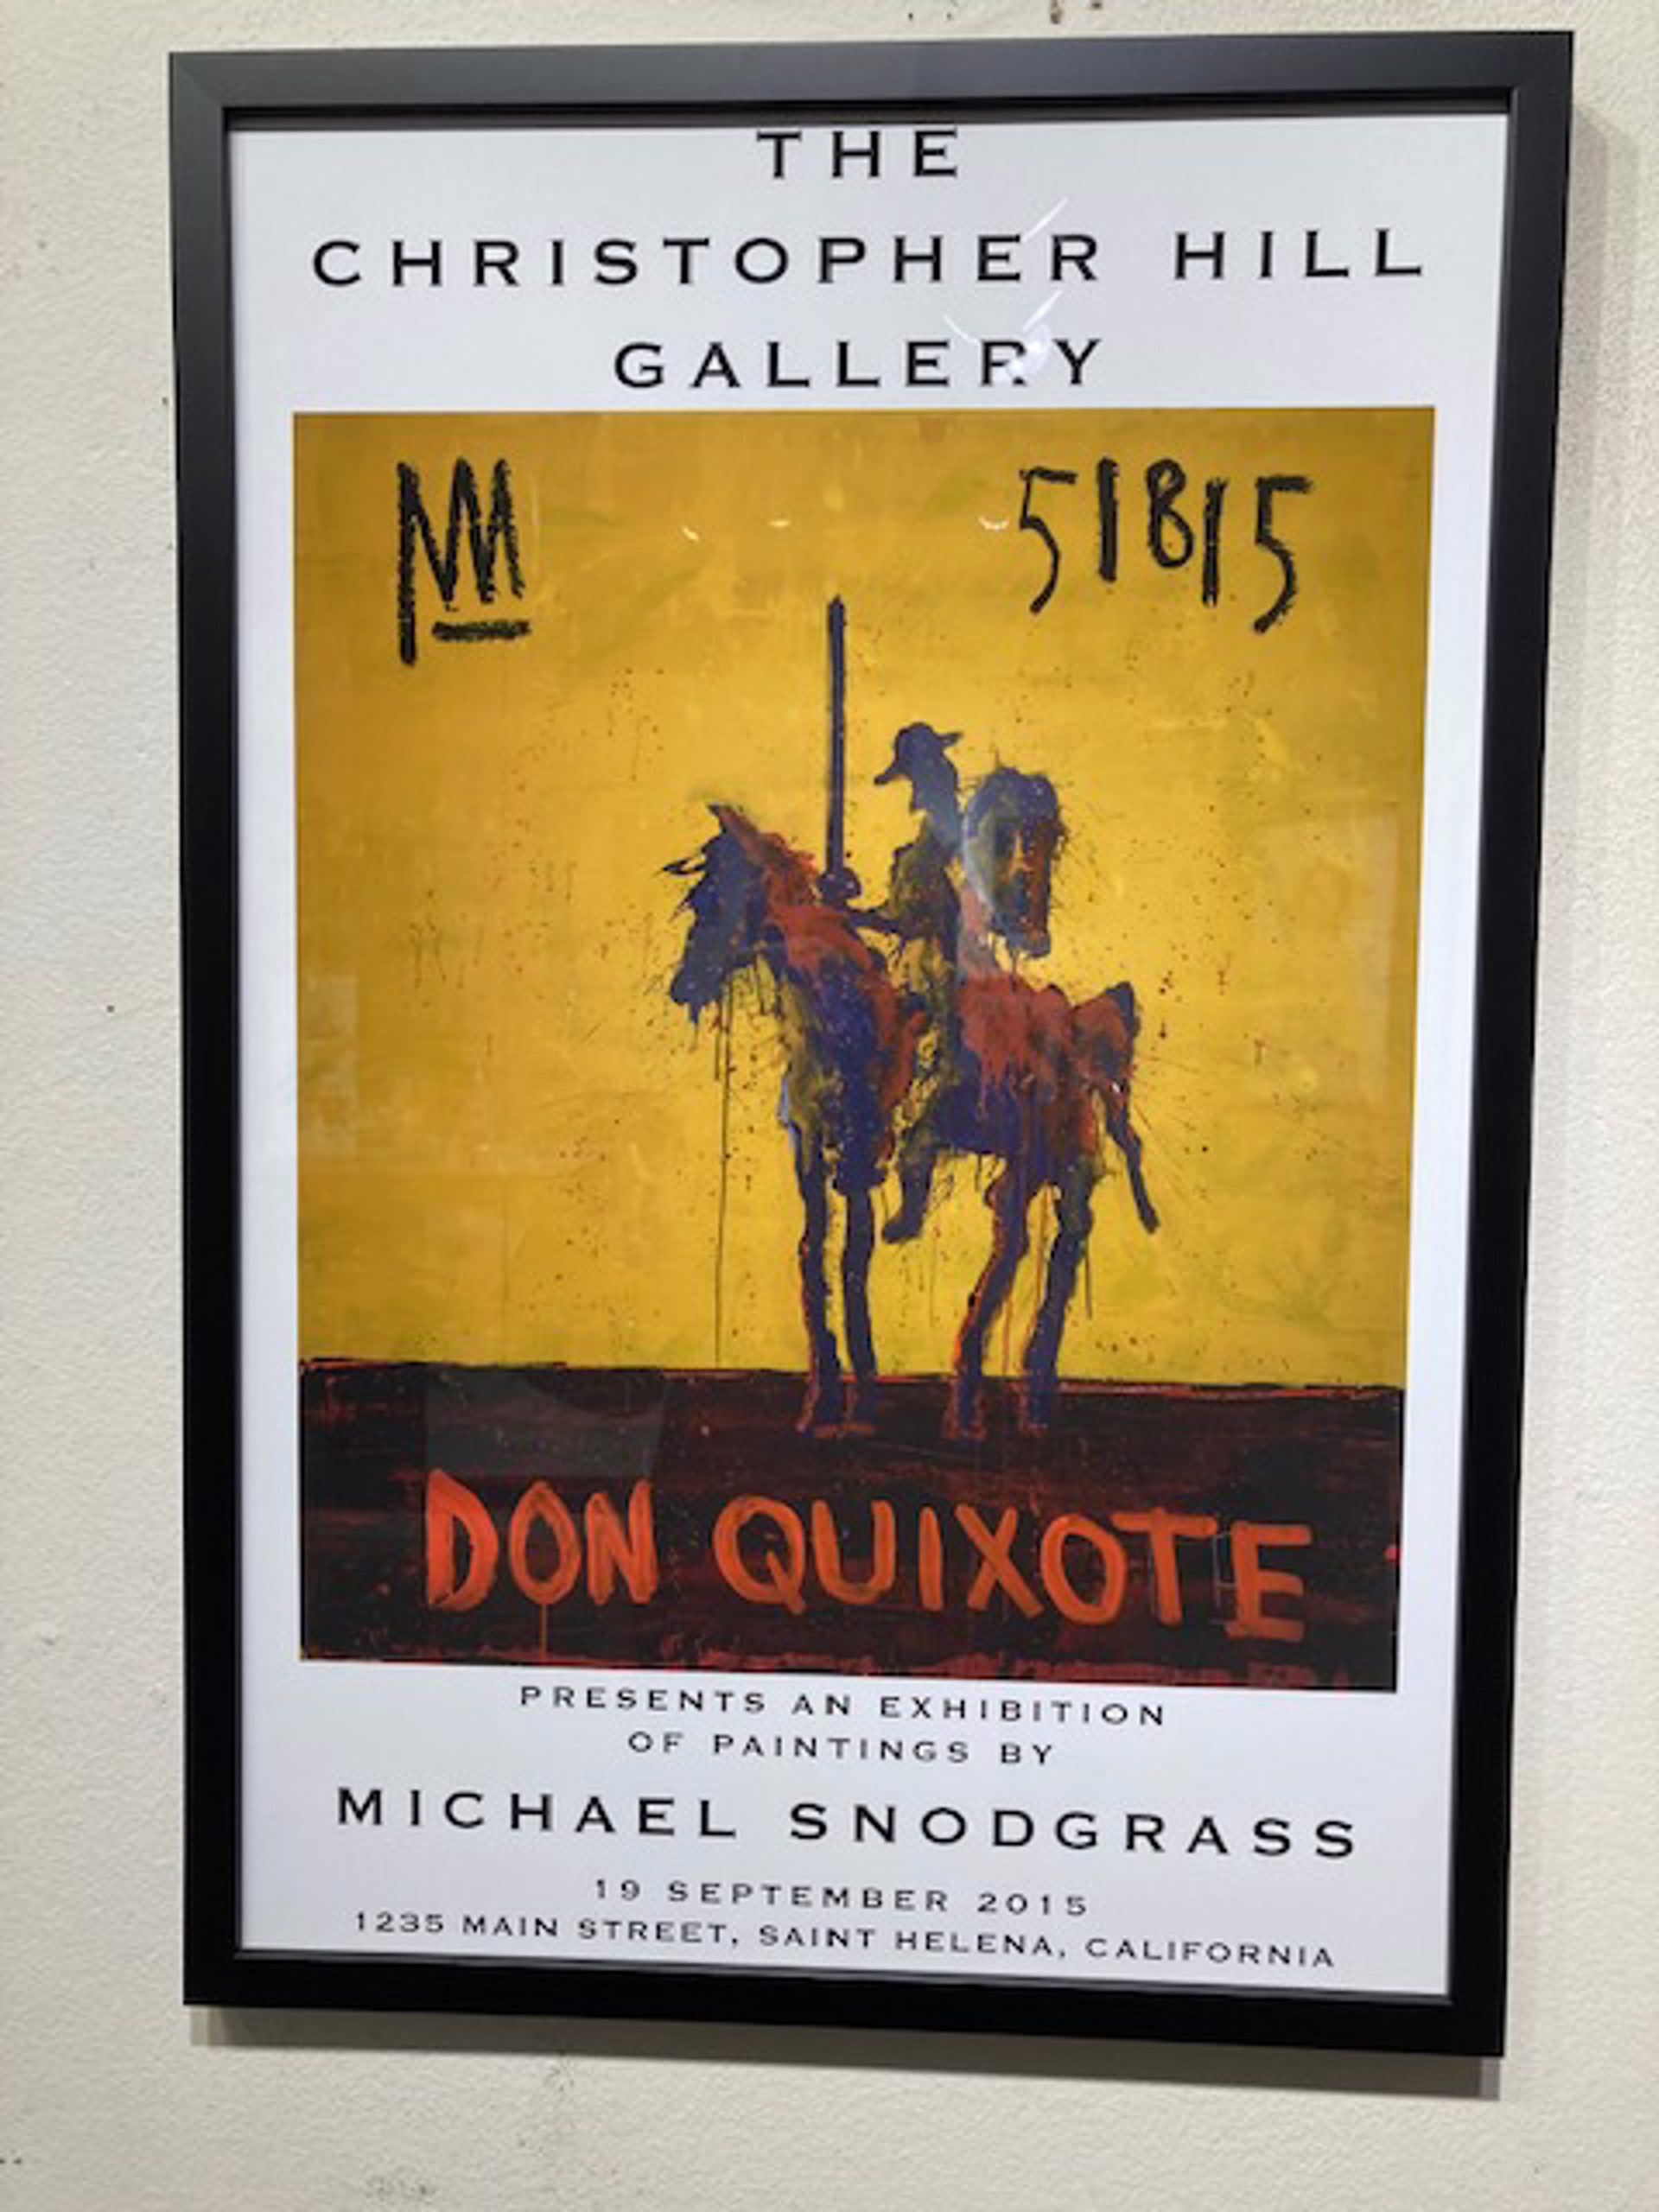 Don Quixote 5.18.15 Showcase Poster by Michael Snodgrass